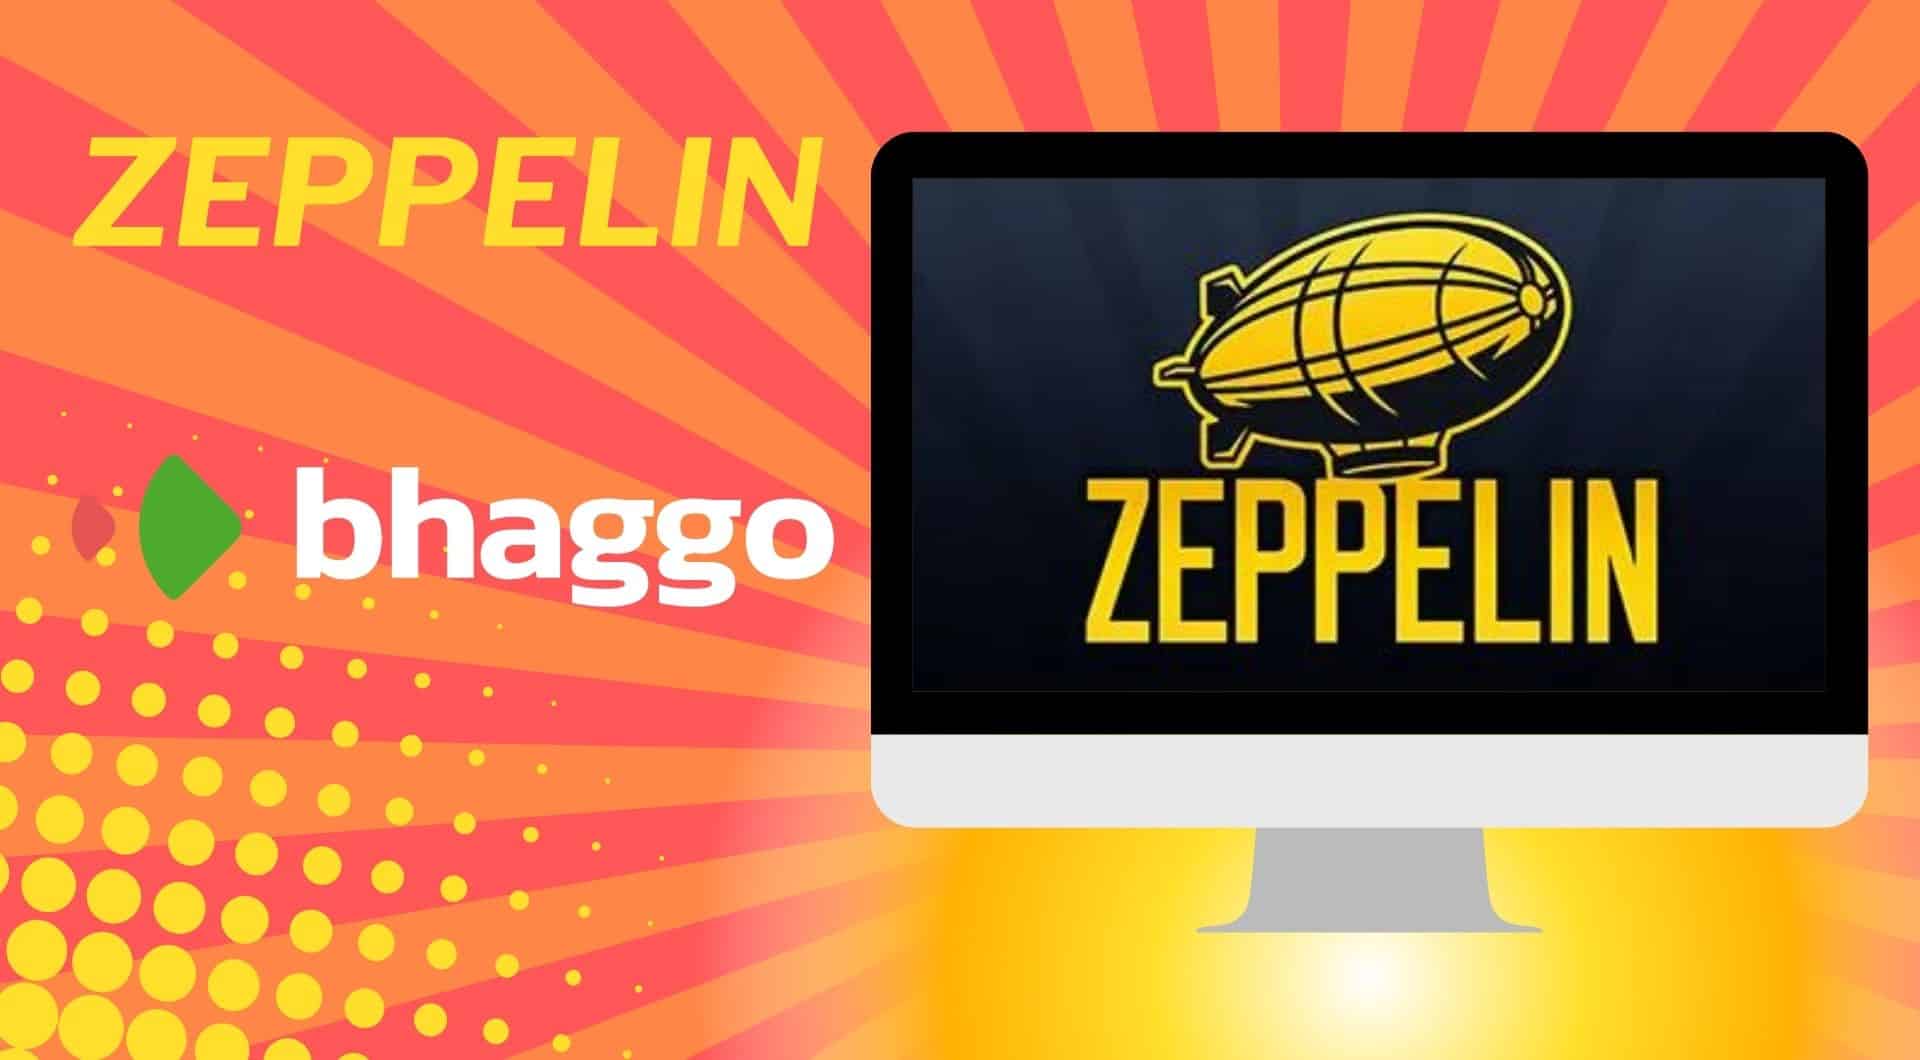 Bhaggo Bangladesh Zeppelin casino game review